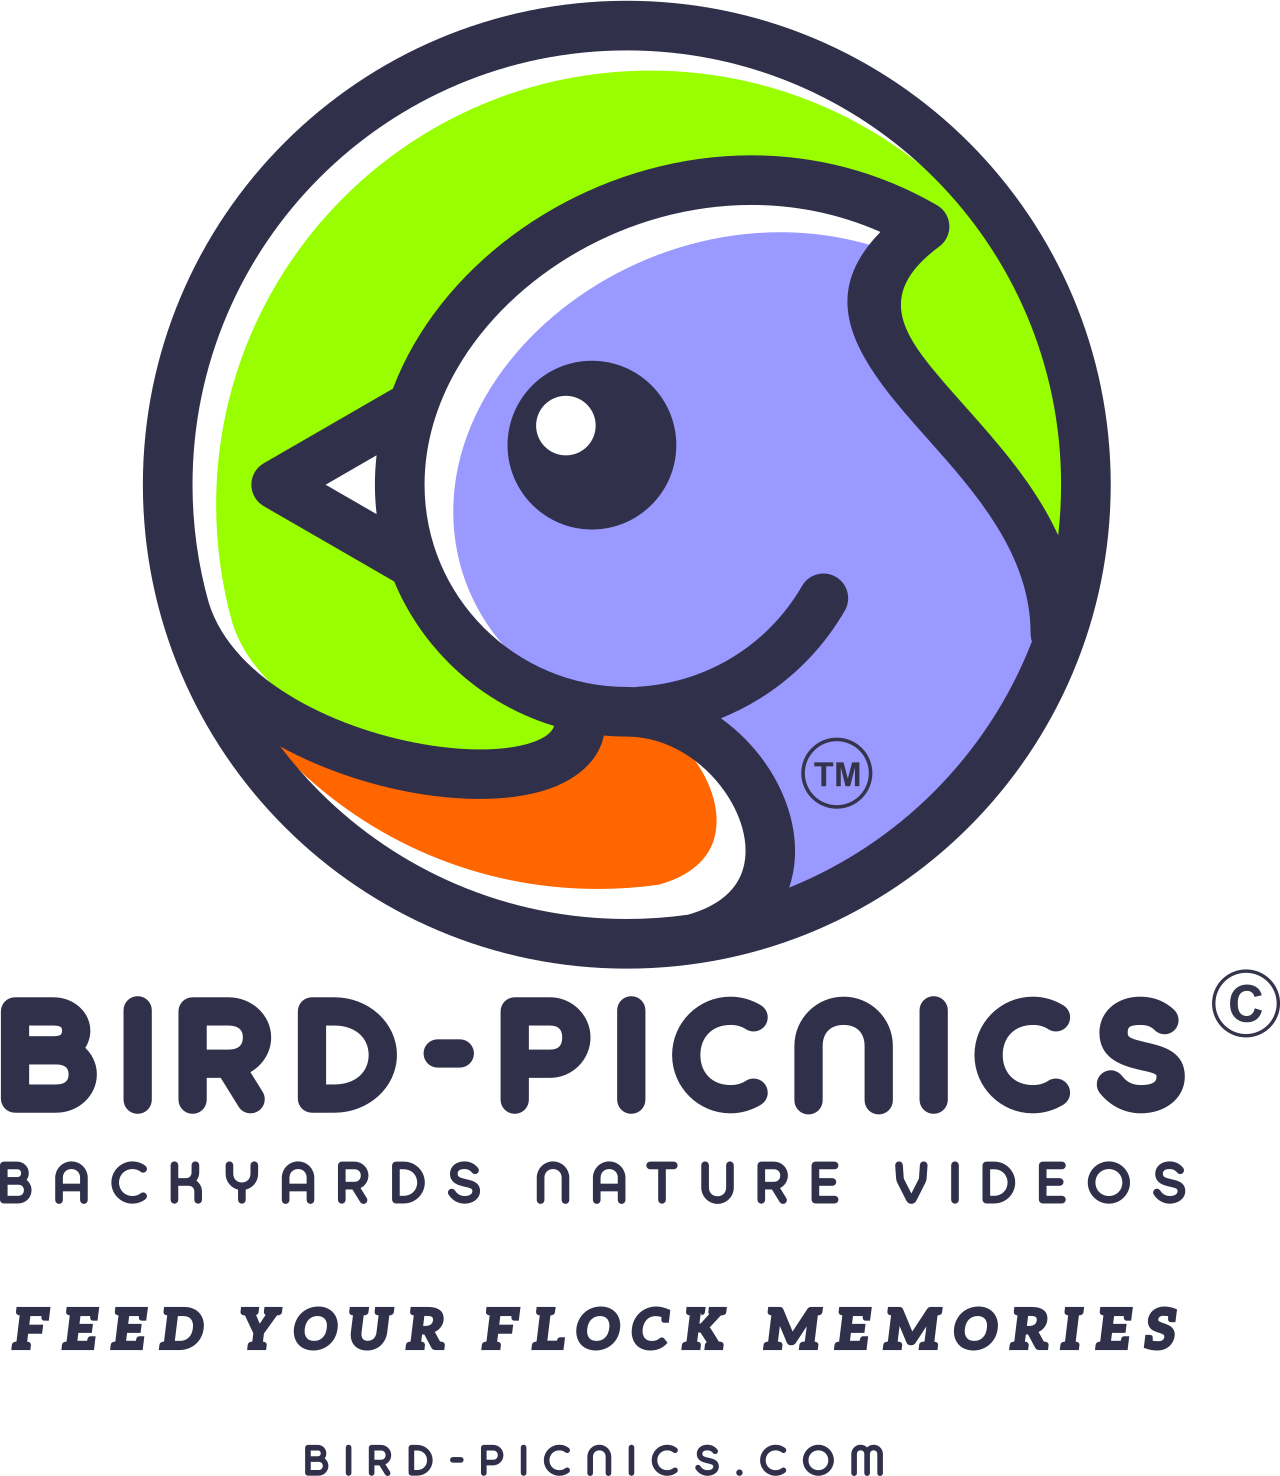 Bird-PICNICS's logo